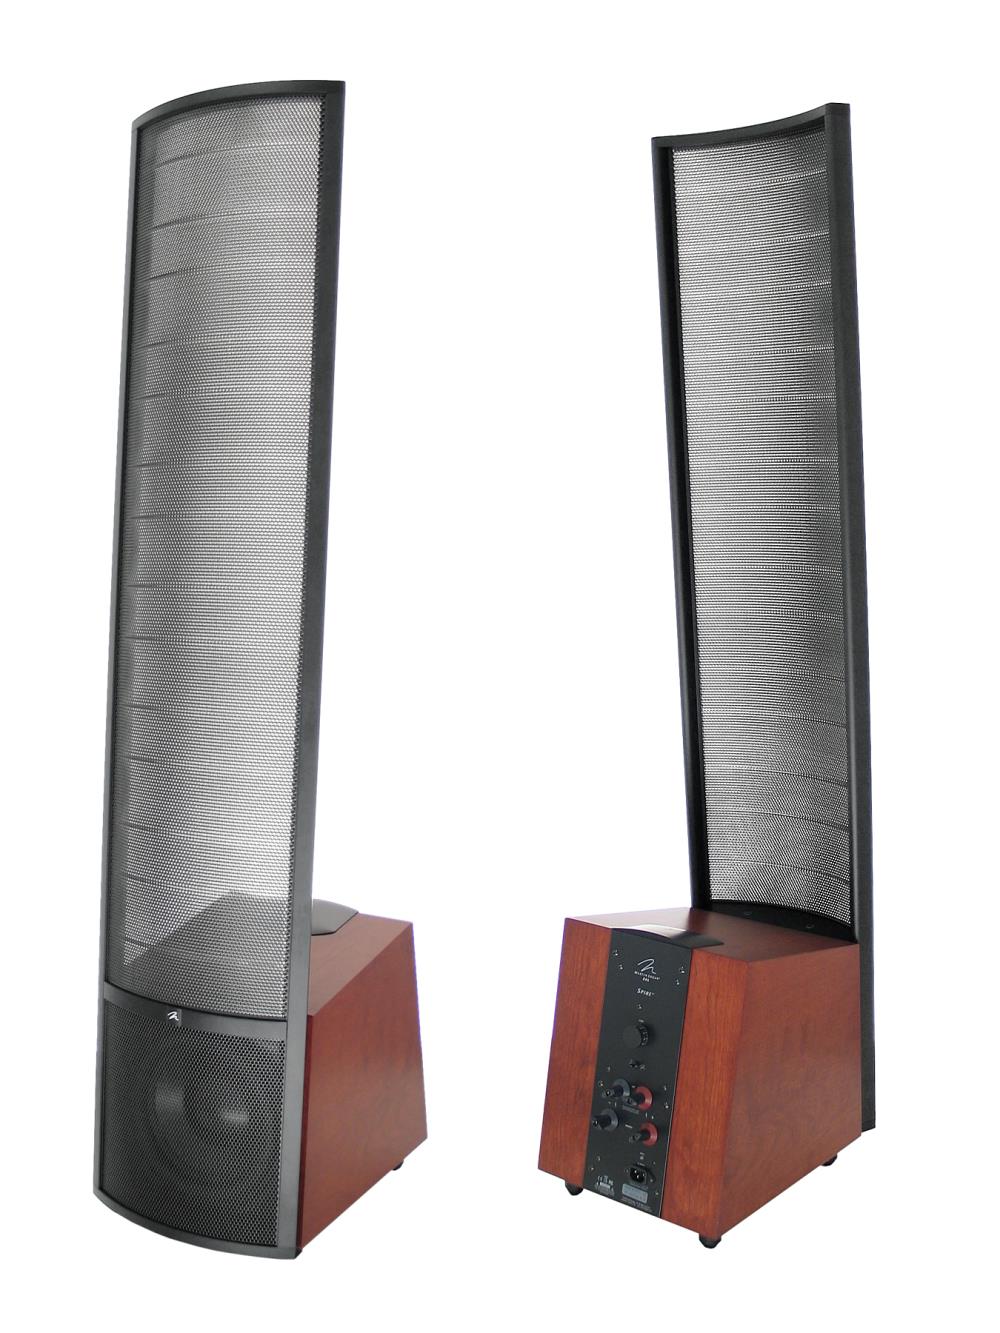 martin-logan-spire-speakers-front-main-large.jpg